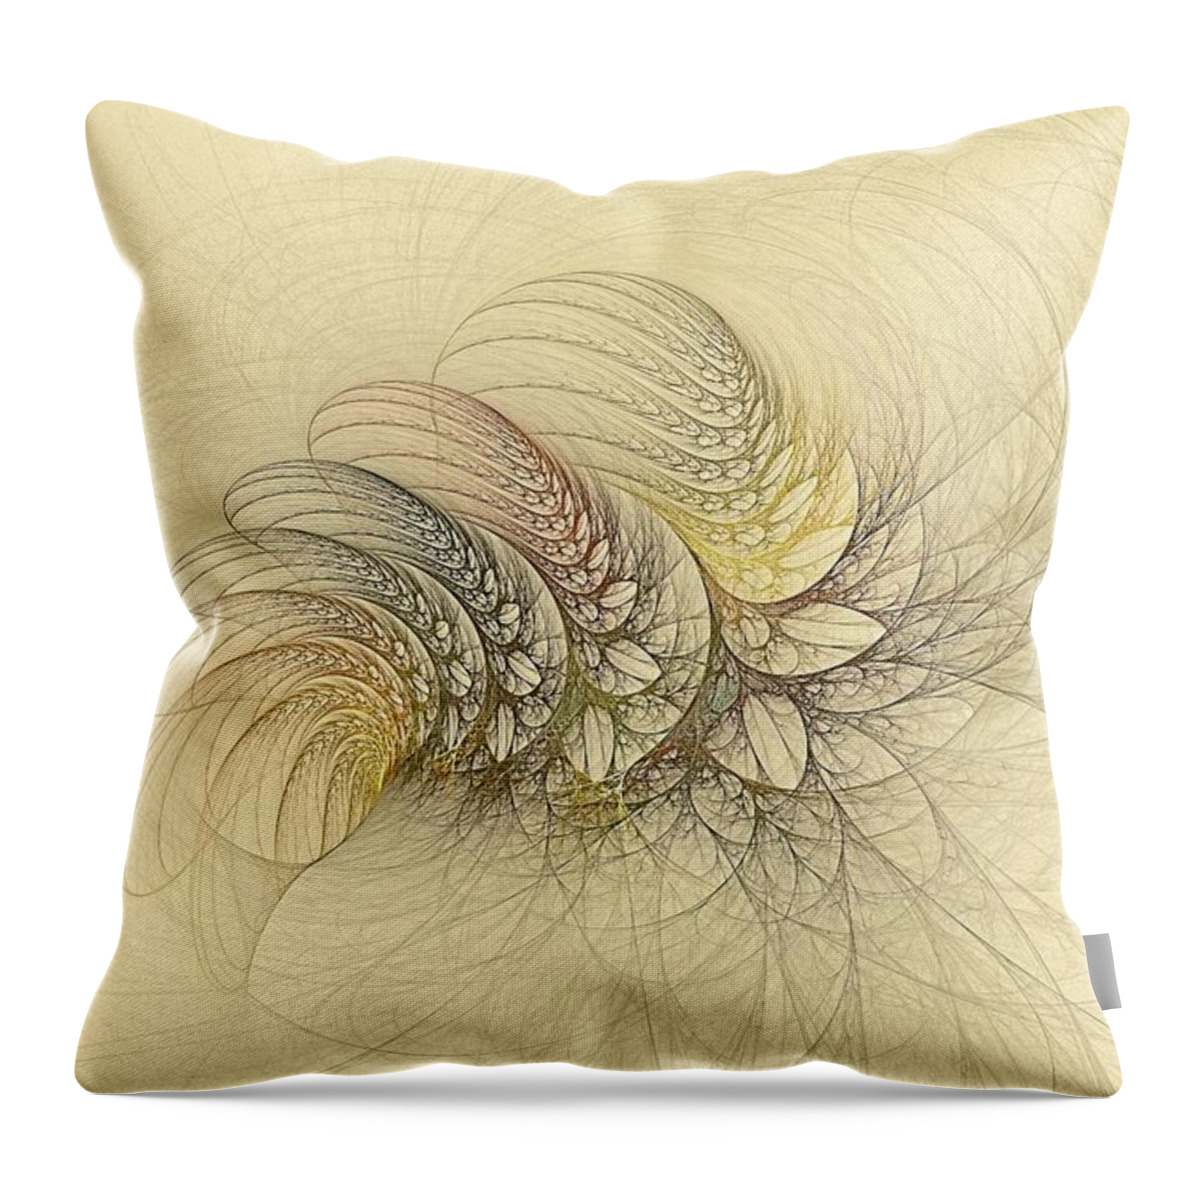 Ferns Throw Pillow featuring the digital art Shallazar Ferns by Doug Morgan